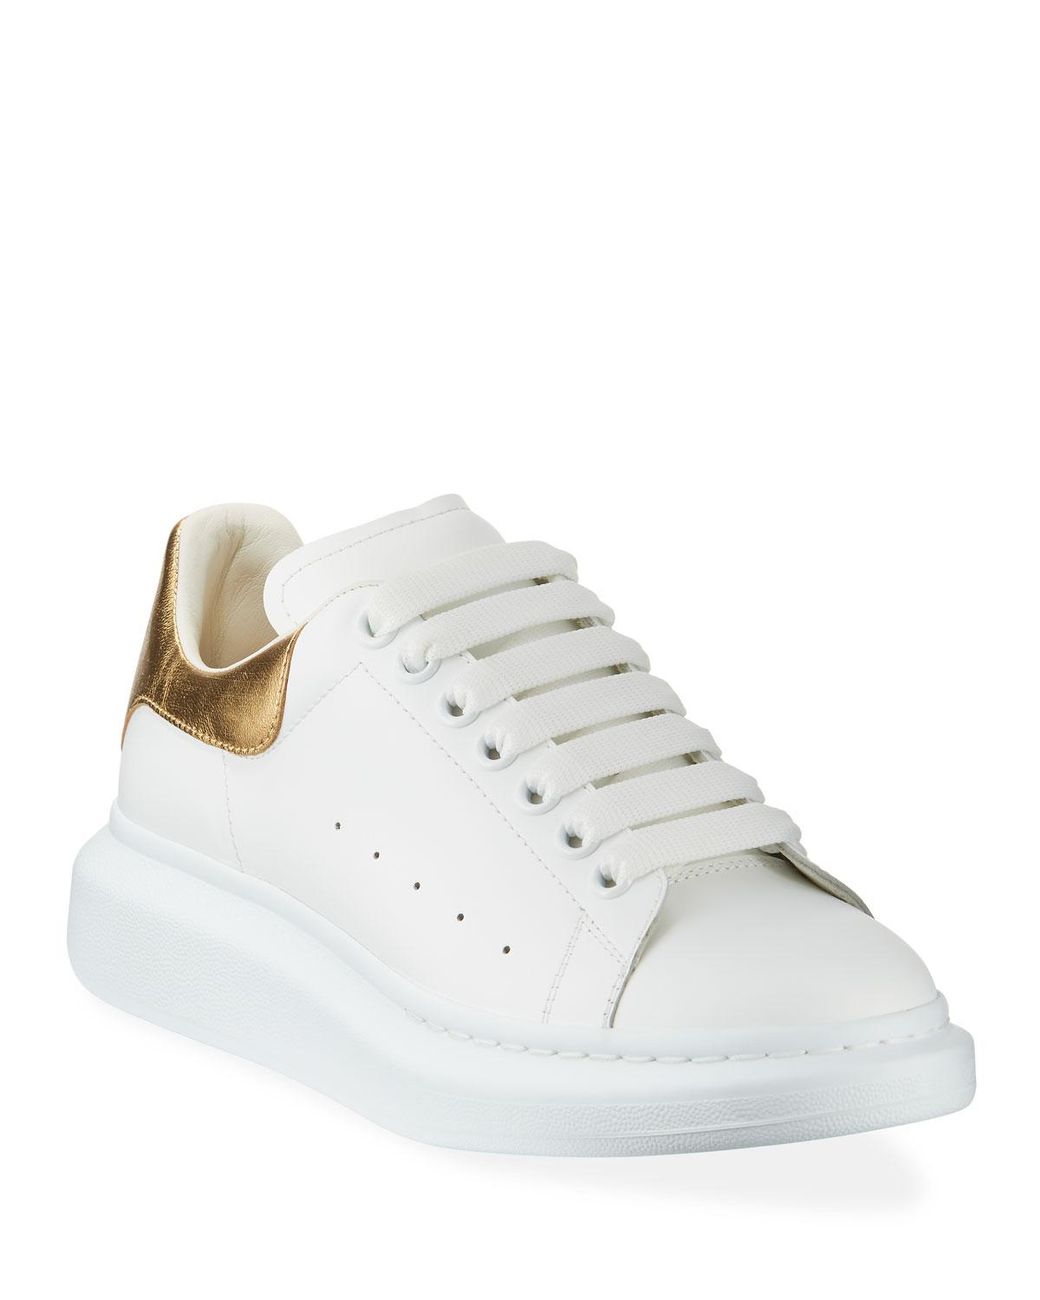 alexander mcqueen sneakers white gold